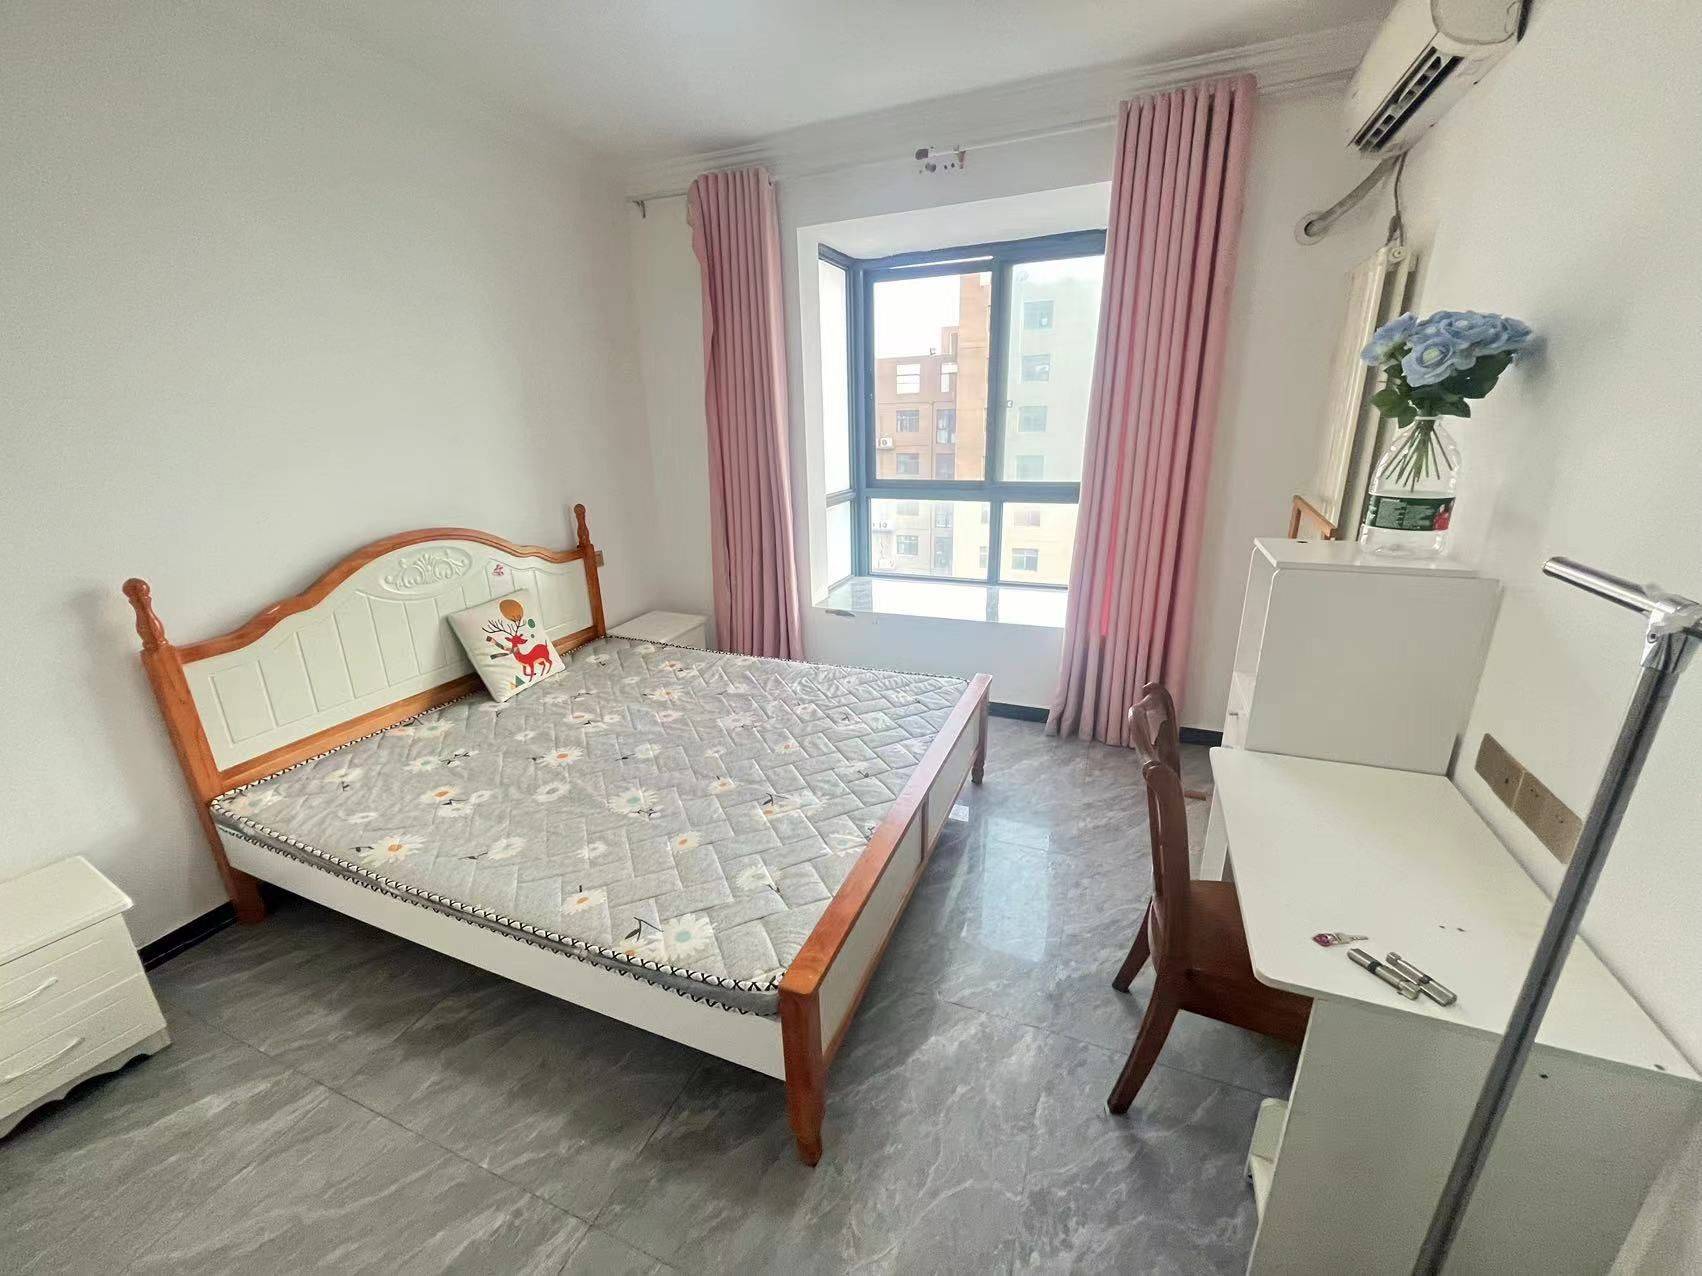 Zhengzhou-Erqi-Cozy Home,Clean&Comfy,No Gender Limit,Hustle & Bustle,“Friends”,Chilled,LGBTQ Friendly,Pet Friendly